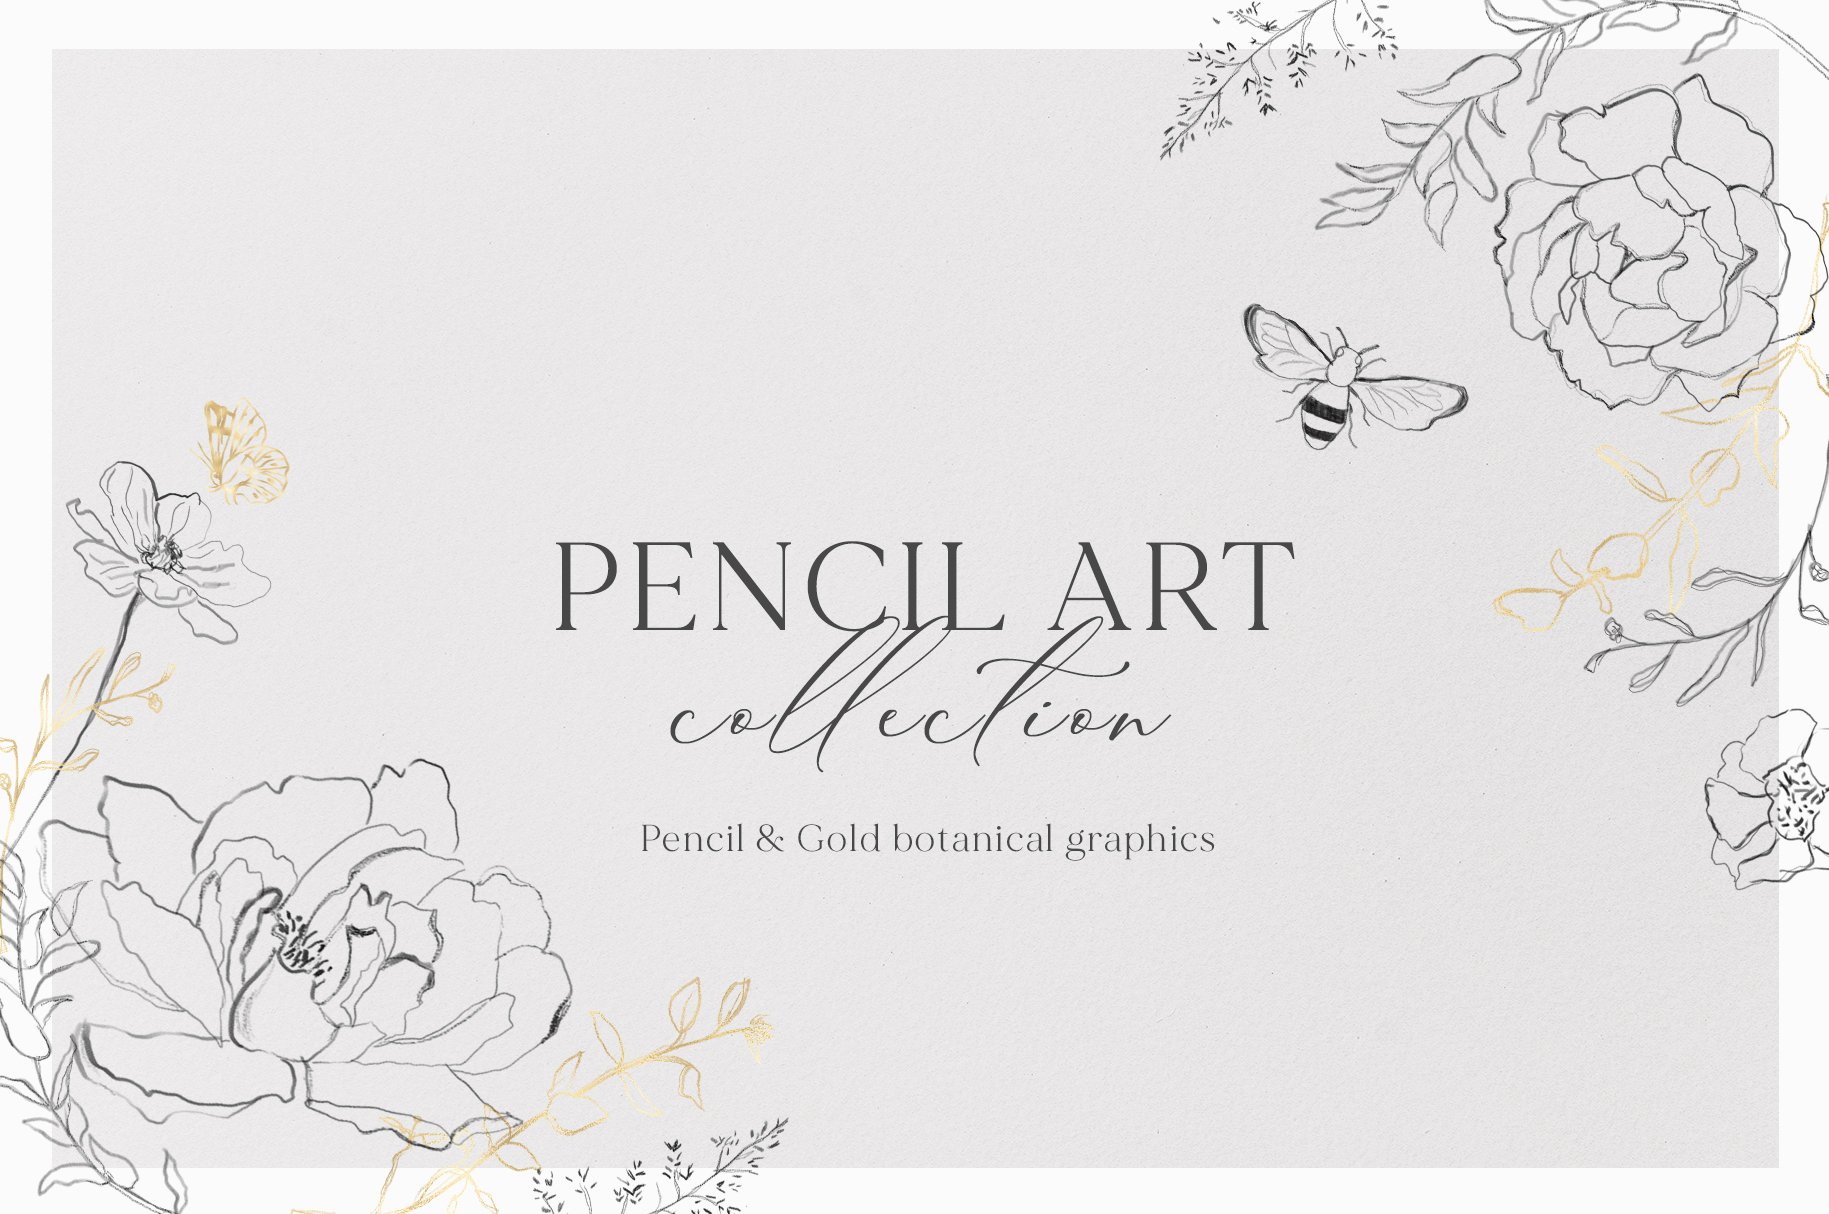 PENCIL ART- Floral line collection cover image.